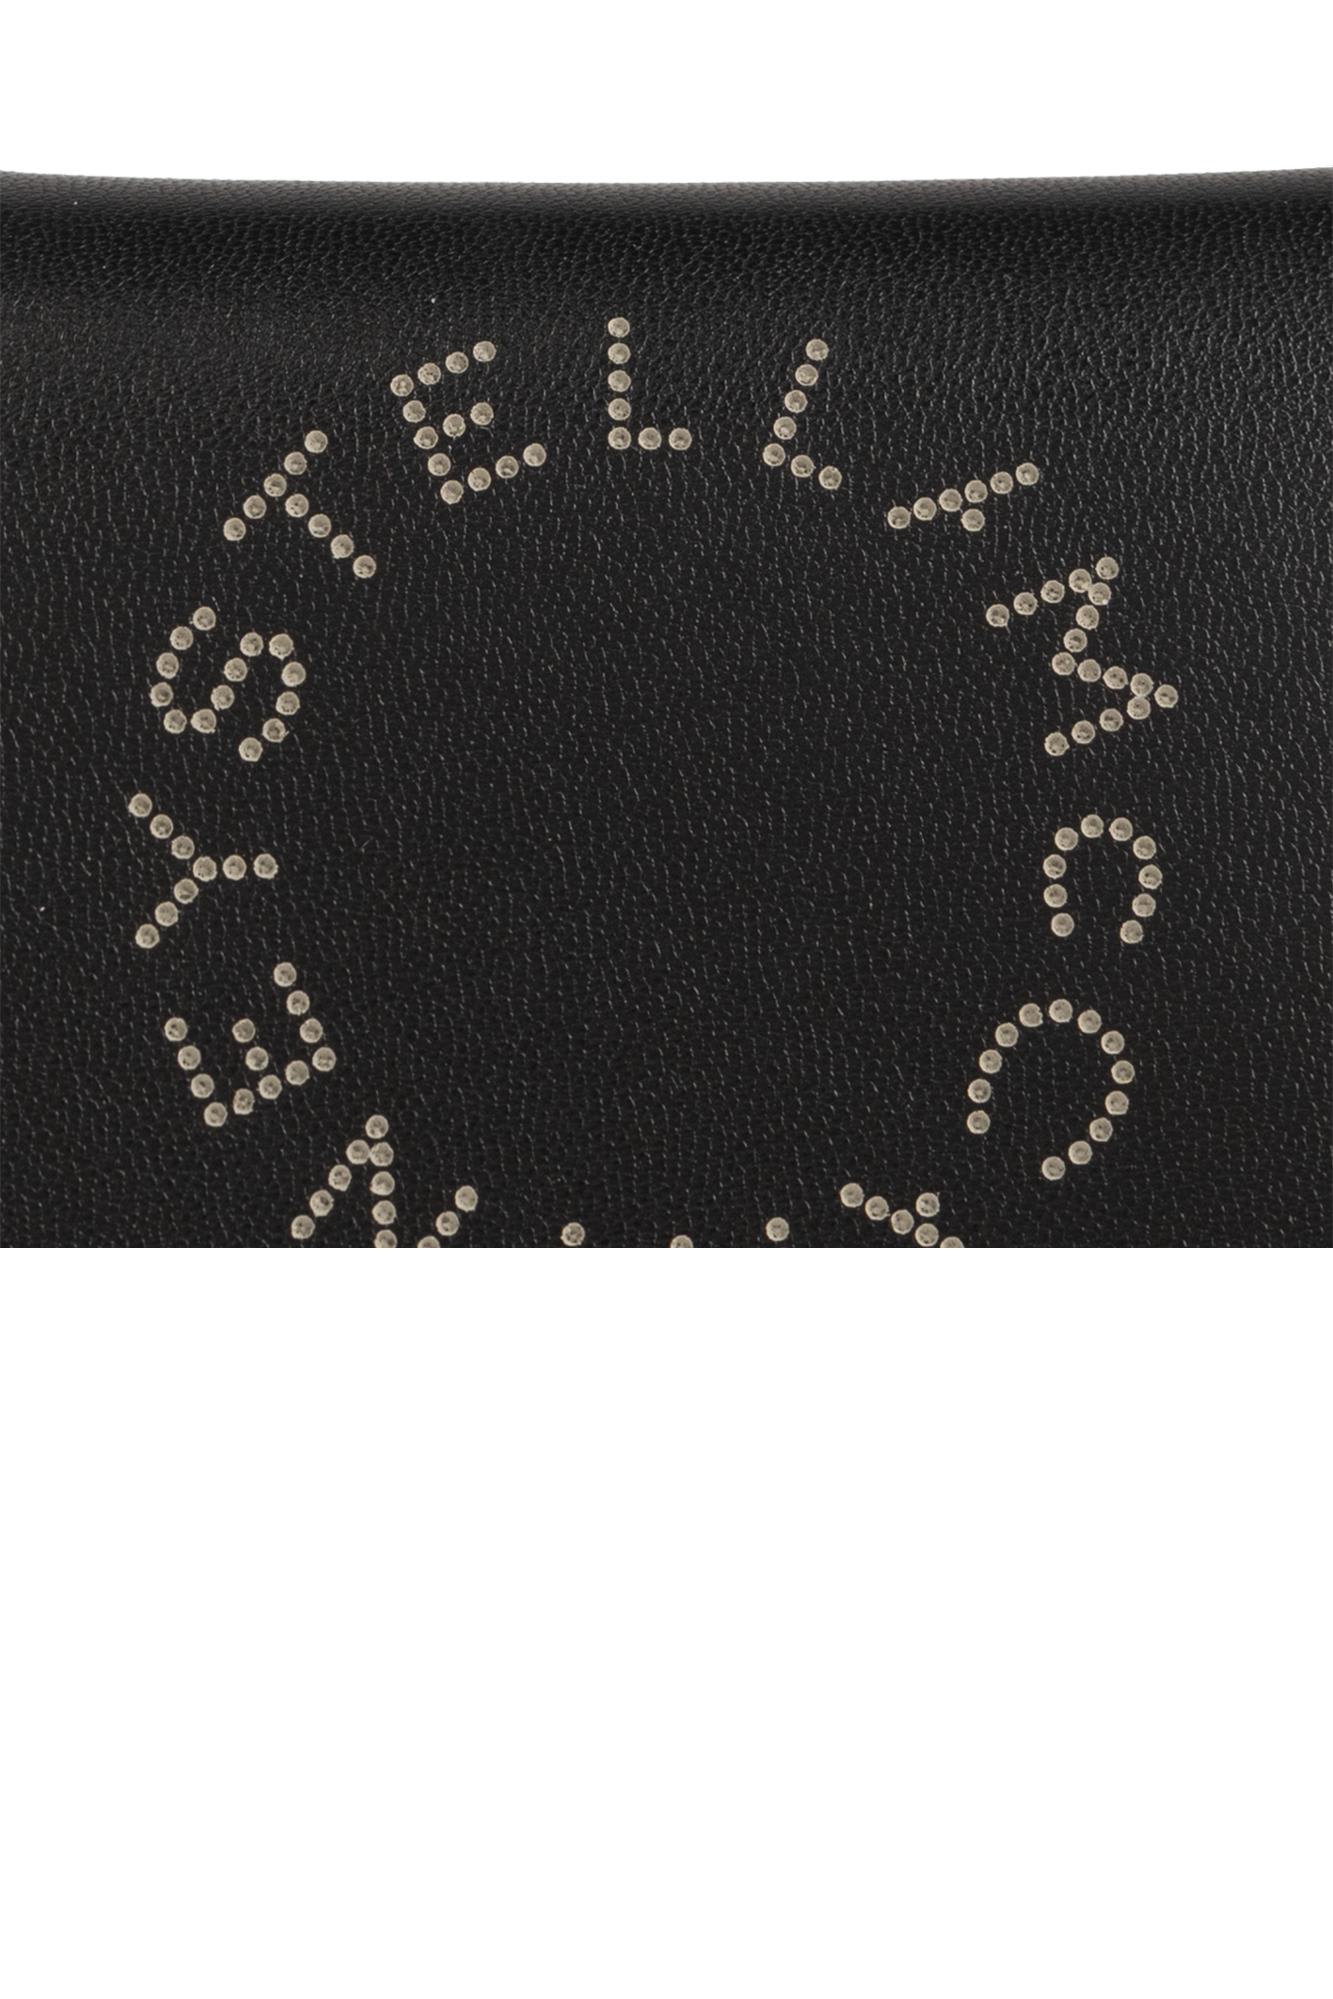 Shop Stella Mccartney Wallet With Logo In Black